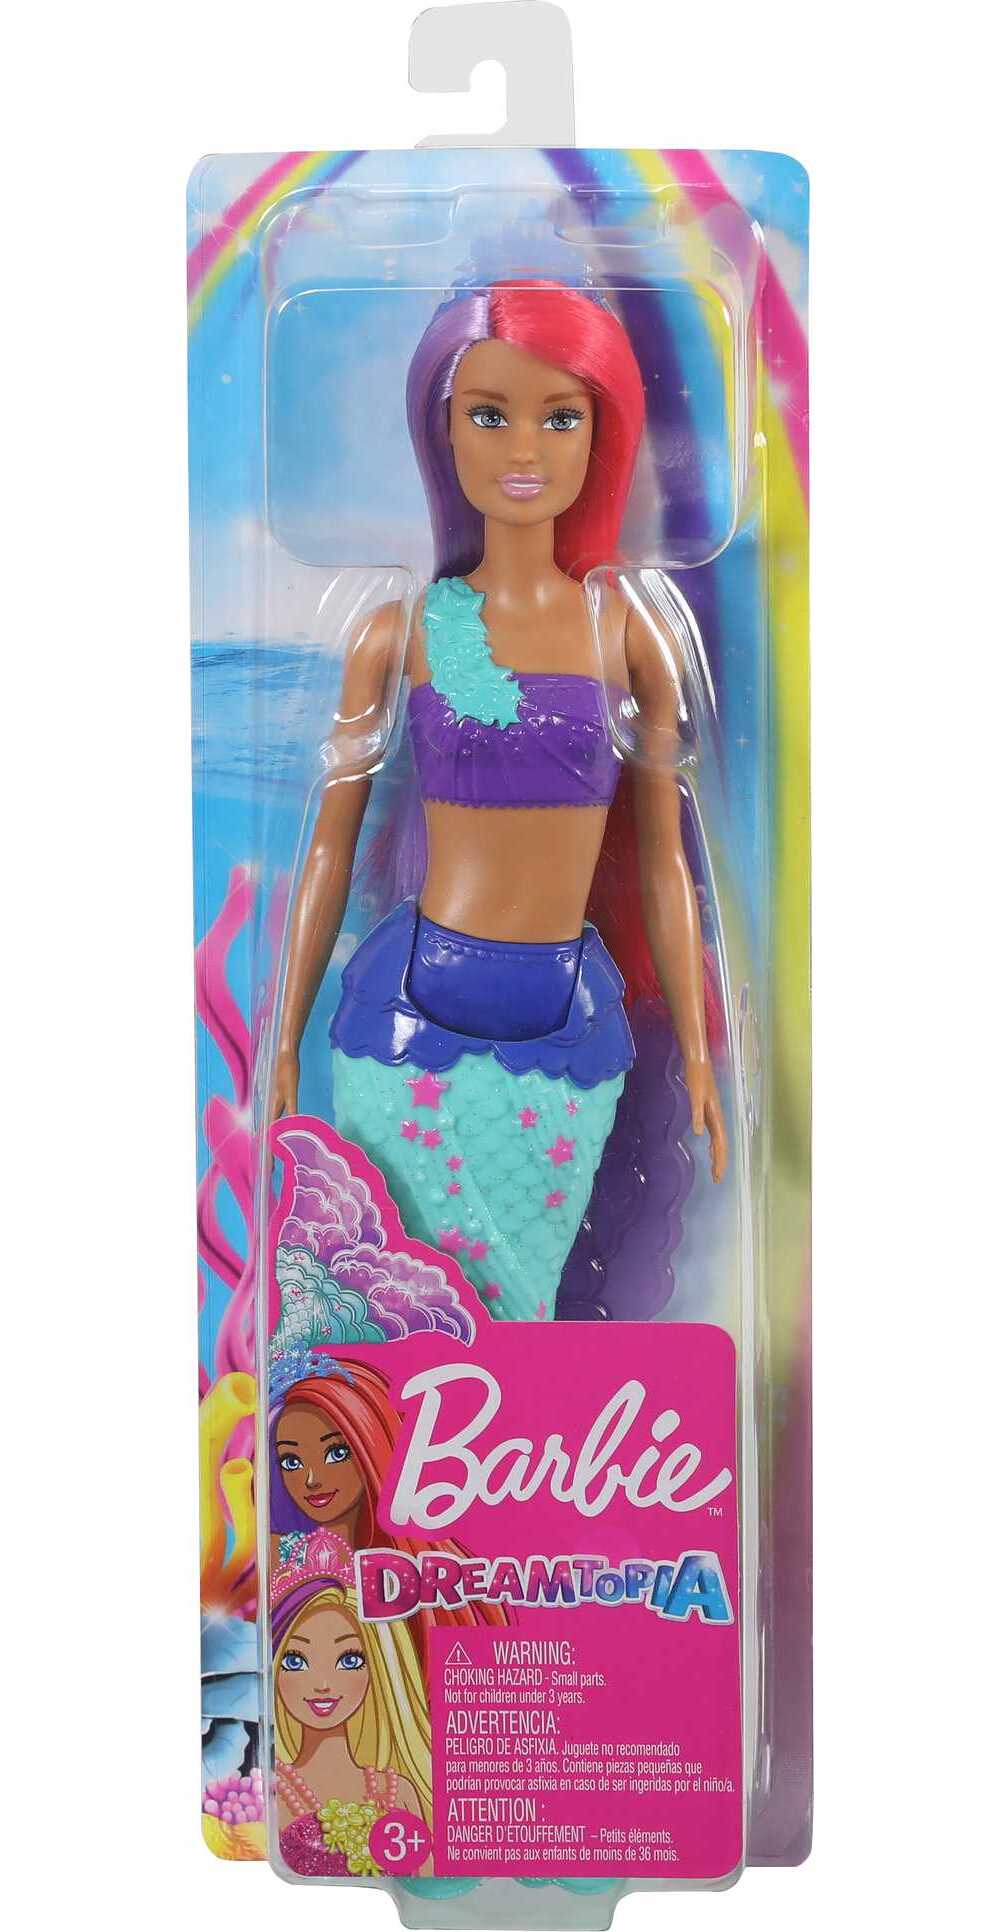 Barbie Dreamtopia Mermaid Doll, 12-inch, Pink and Purple Hair - image 6 of 6